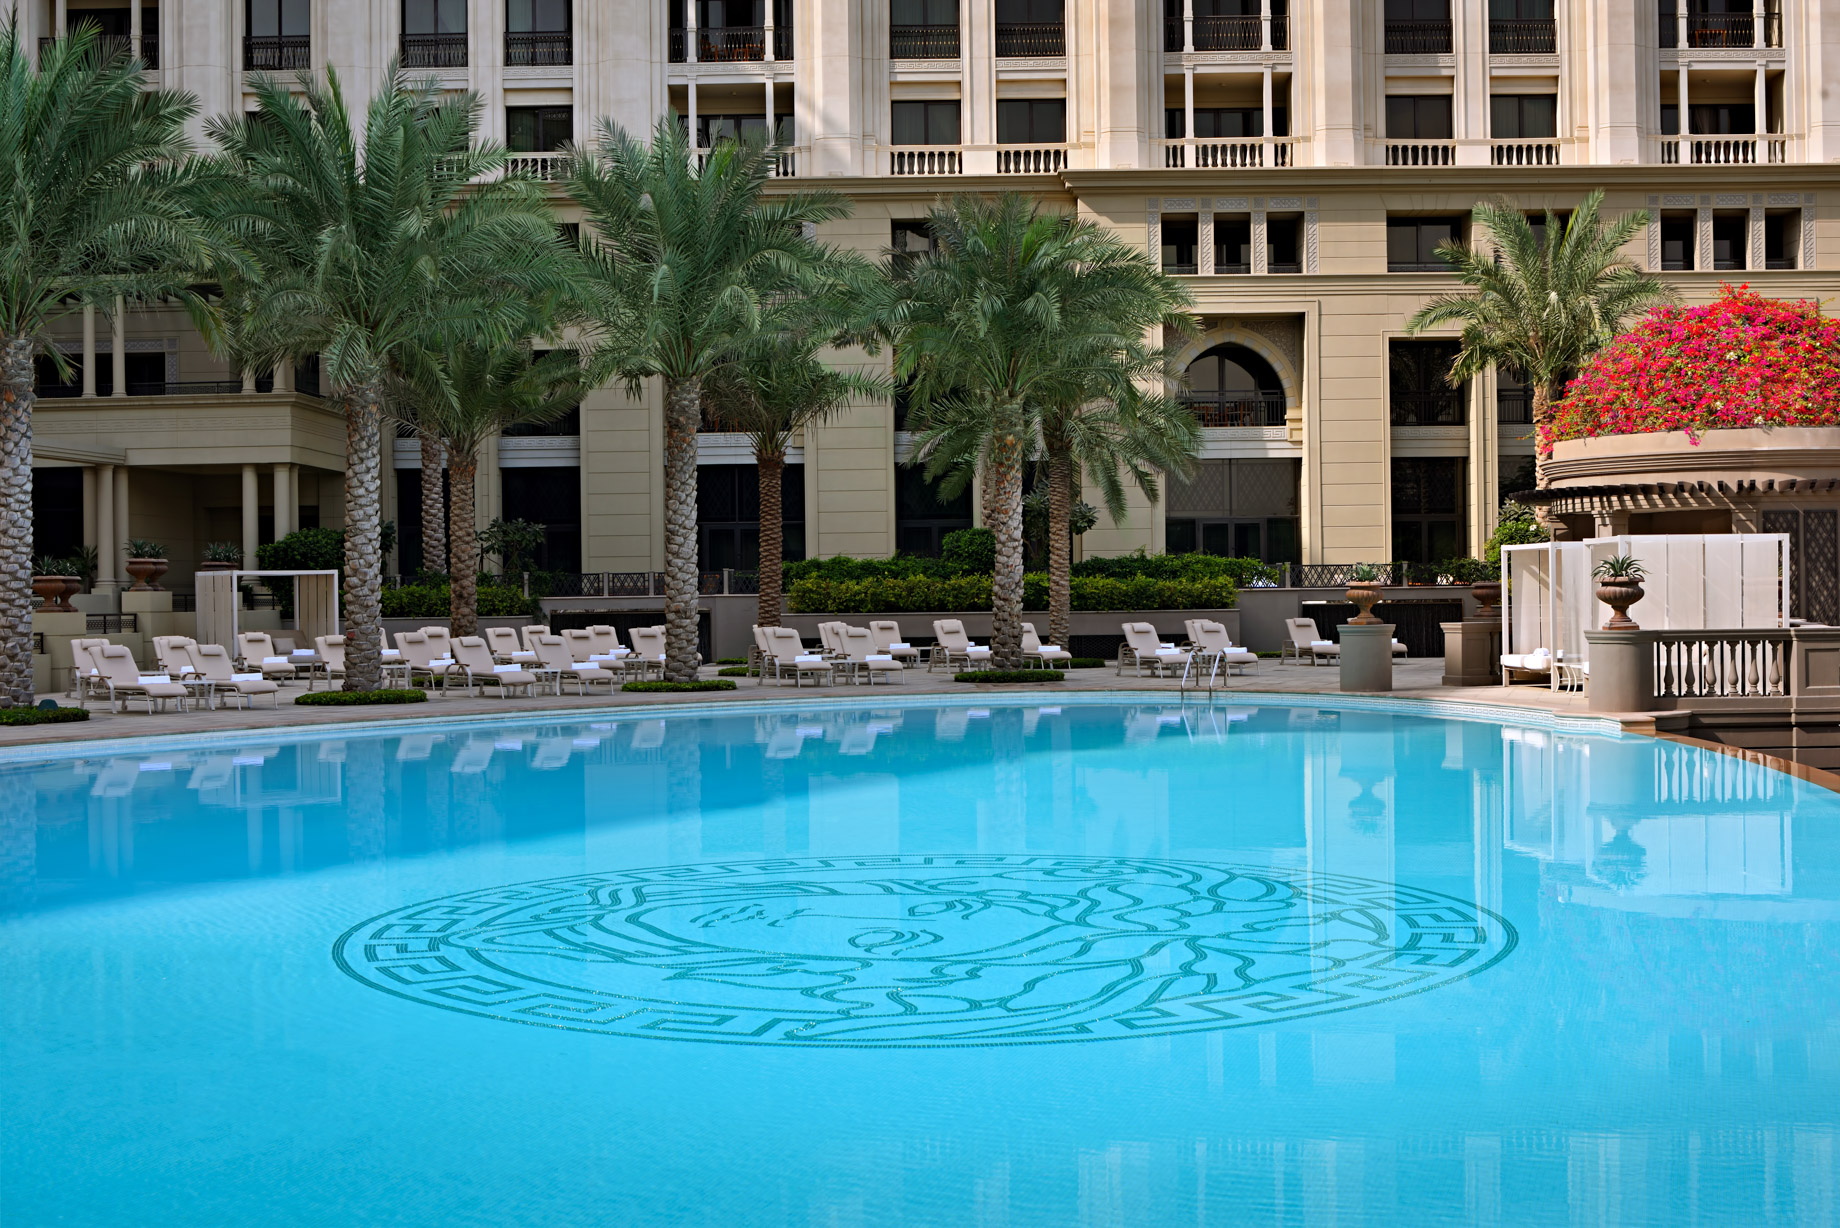 Palazzo Versace Dubai Hotel - Jaddaf Waterfront, Dubai, UAE - Central Pool